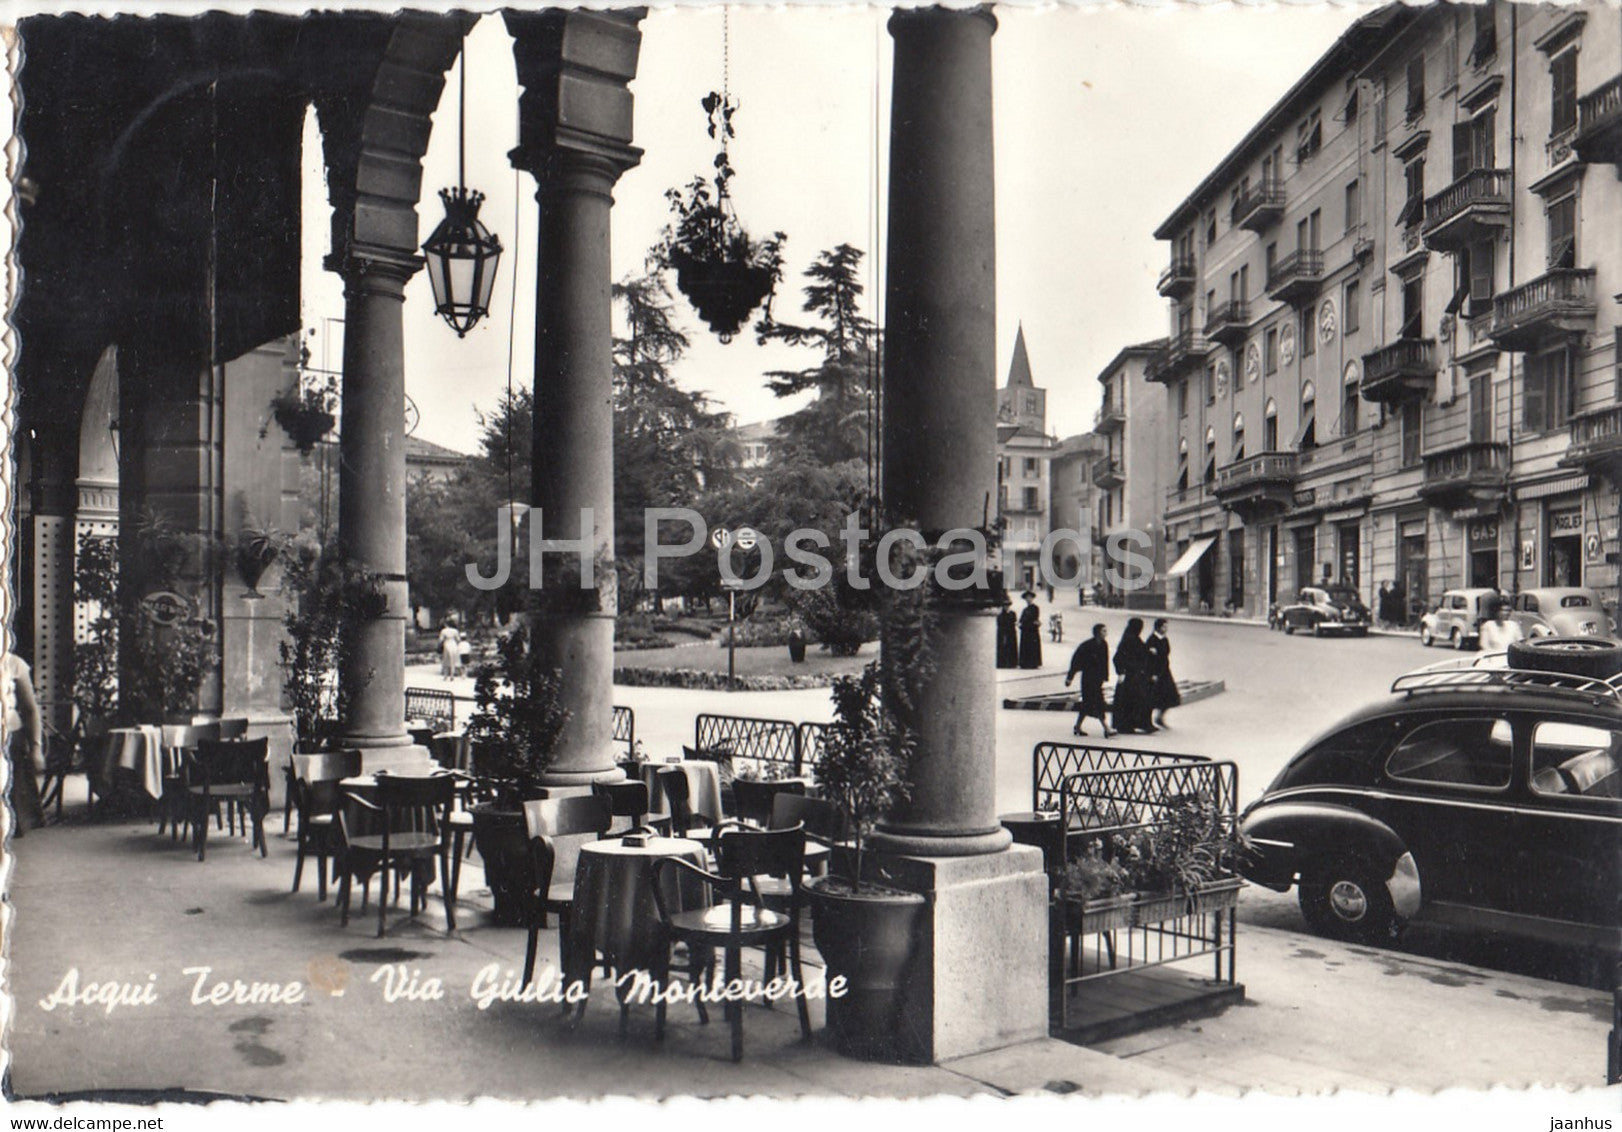 Acqui Terme - Via Giulio Monteverde - old postcard - 1956 - Italy - used - JH Postcards